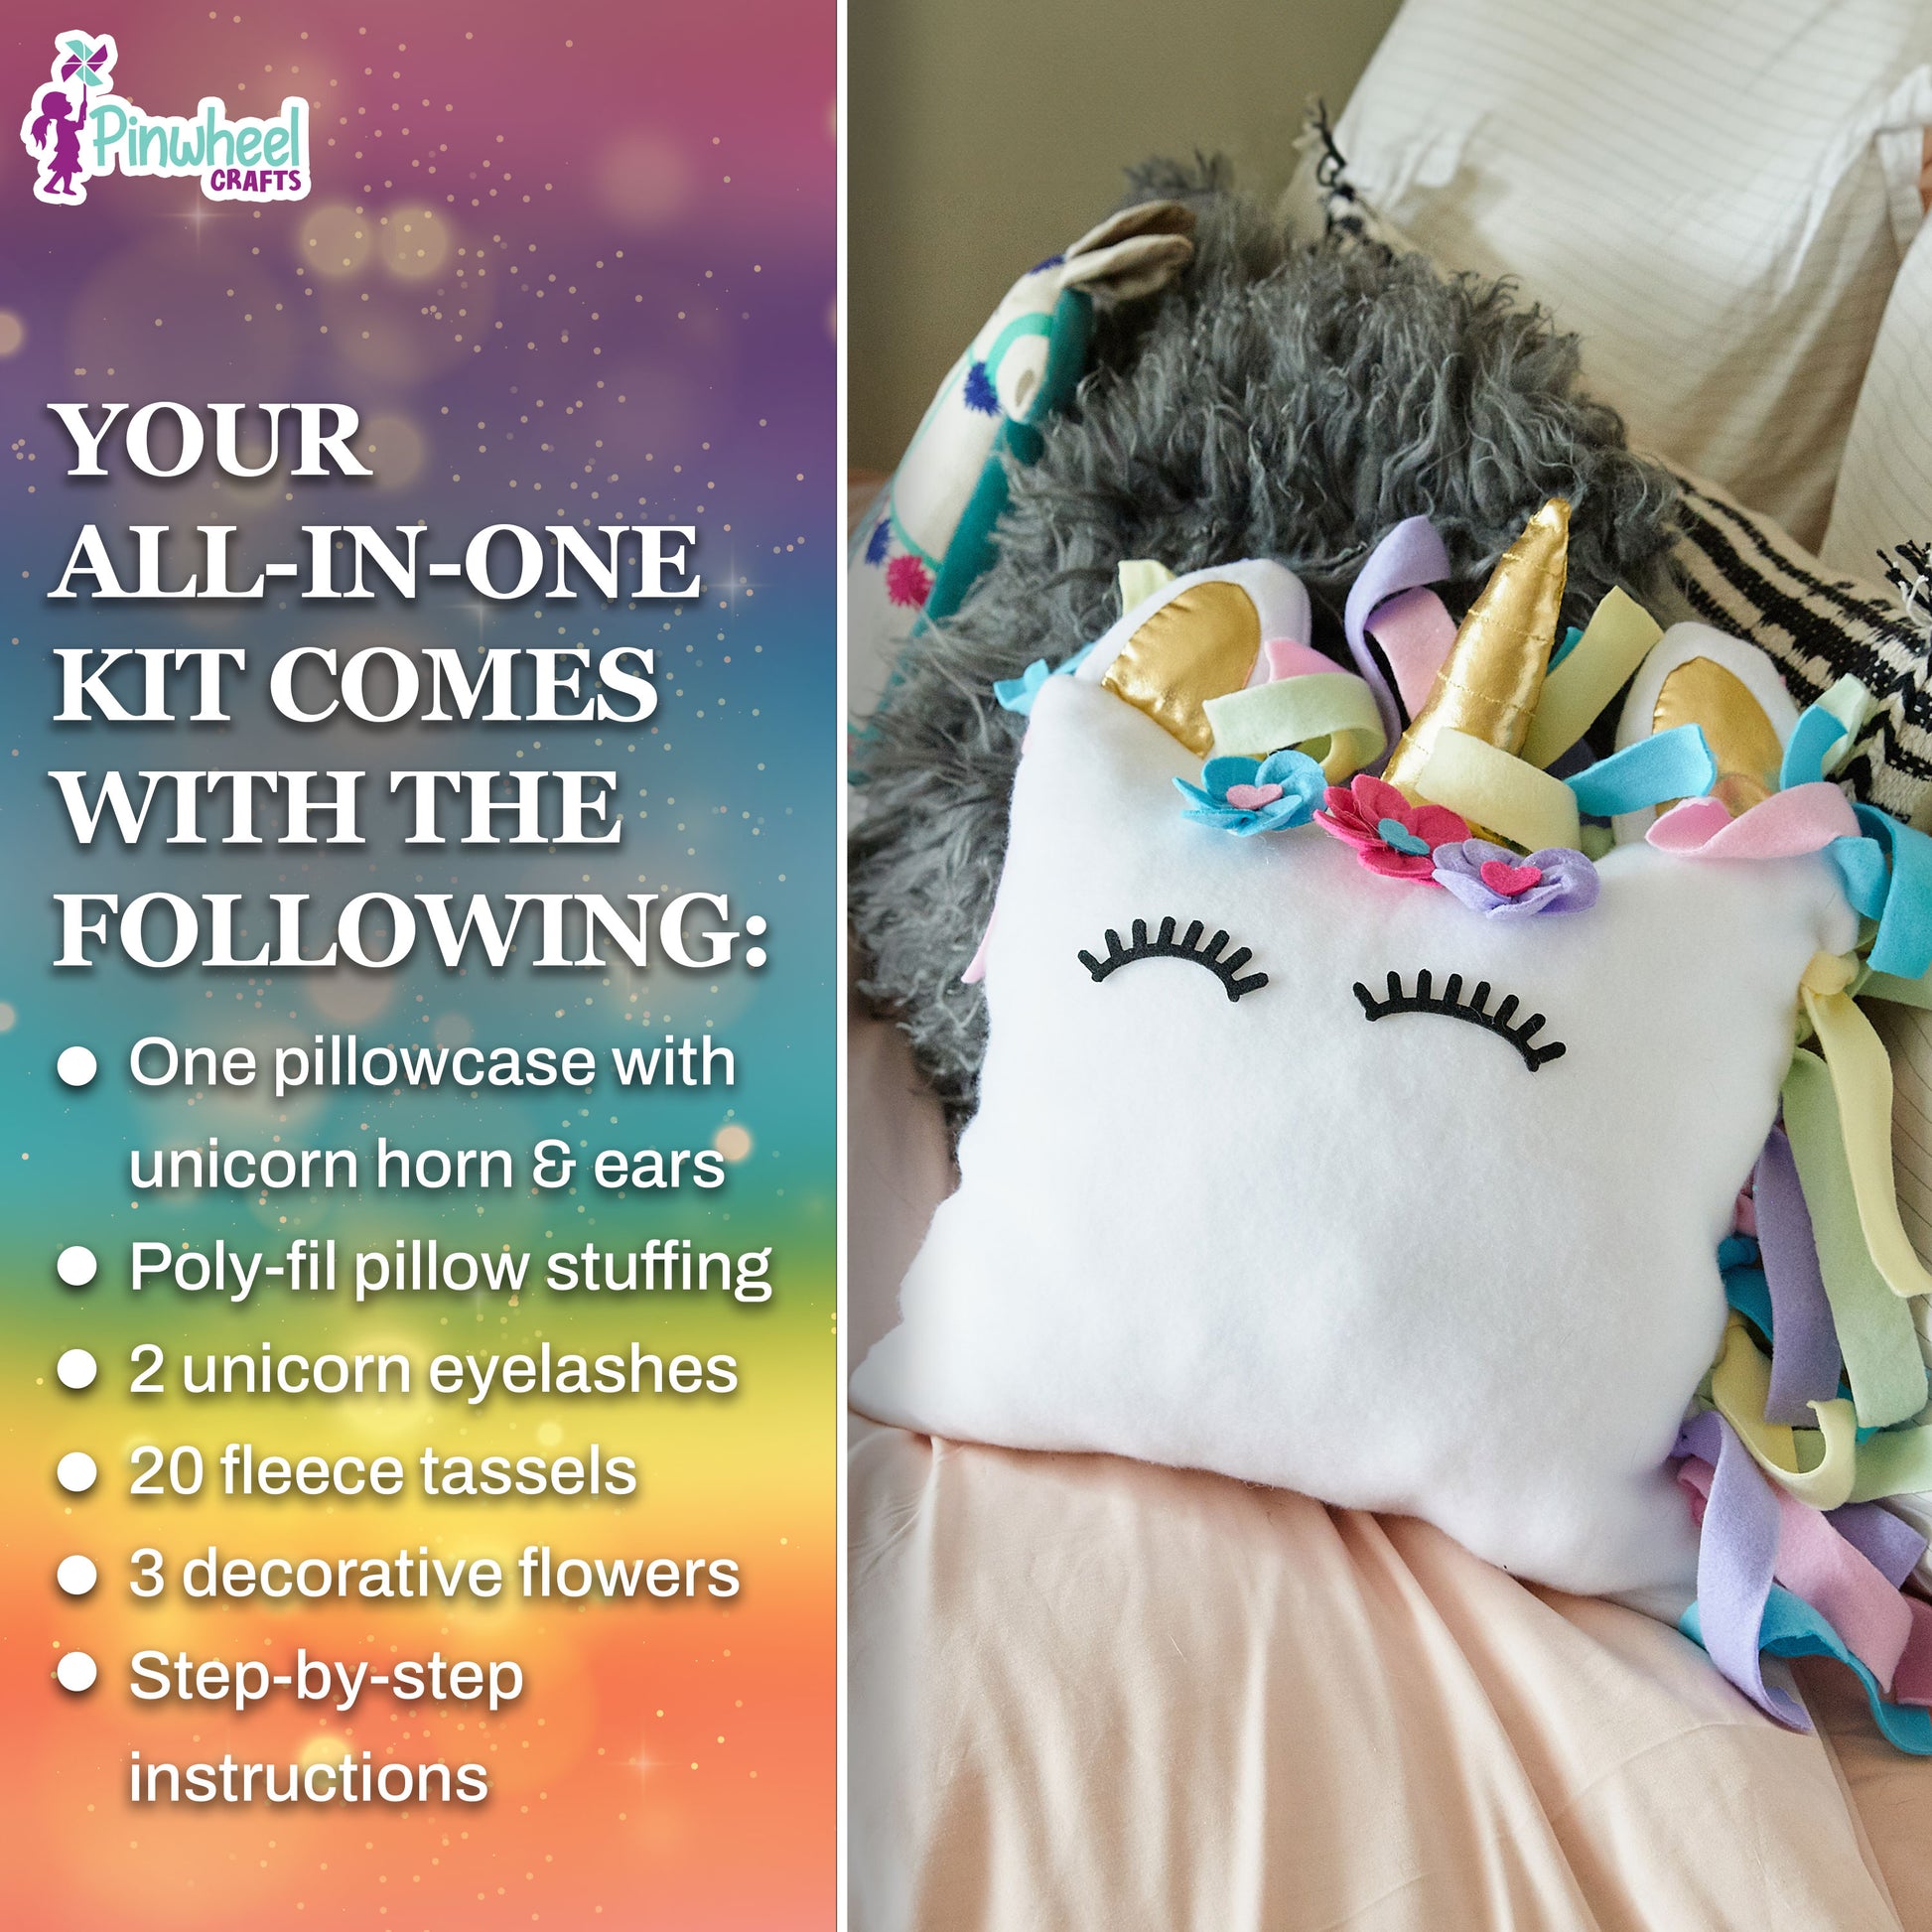 Sewing Craft Kit for Girls, Sew Art Kit, Kids Fairy Pillow - China